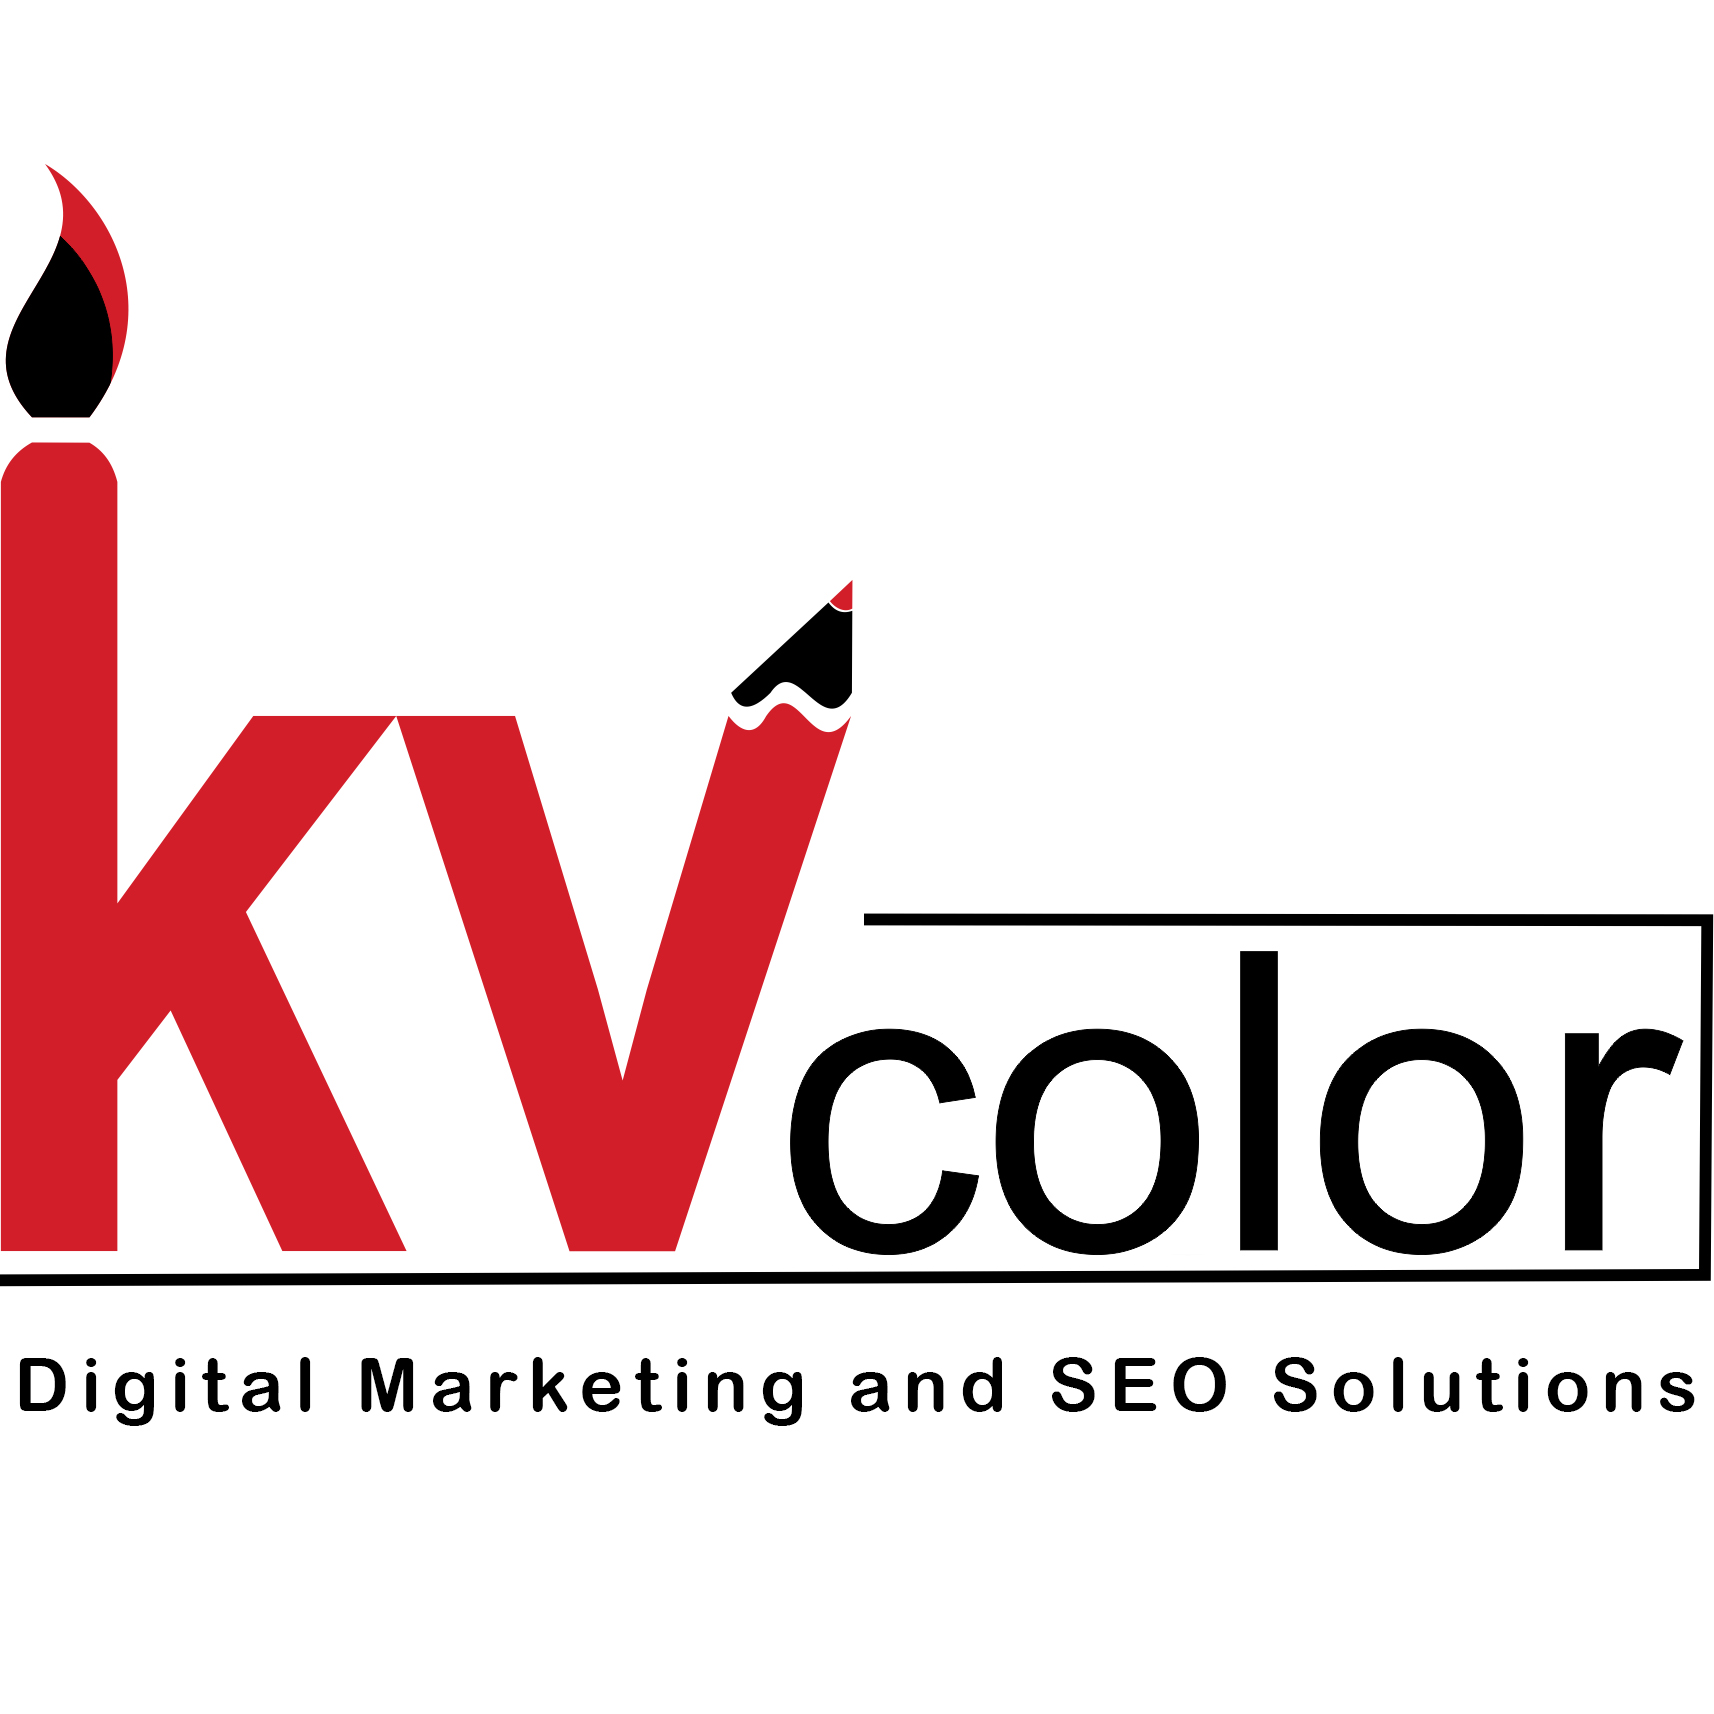 Kvcolor- Digital Marketing and SEO Solutions Logo